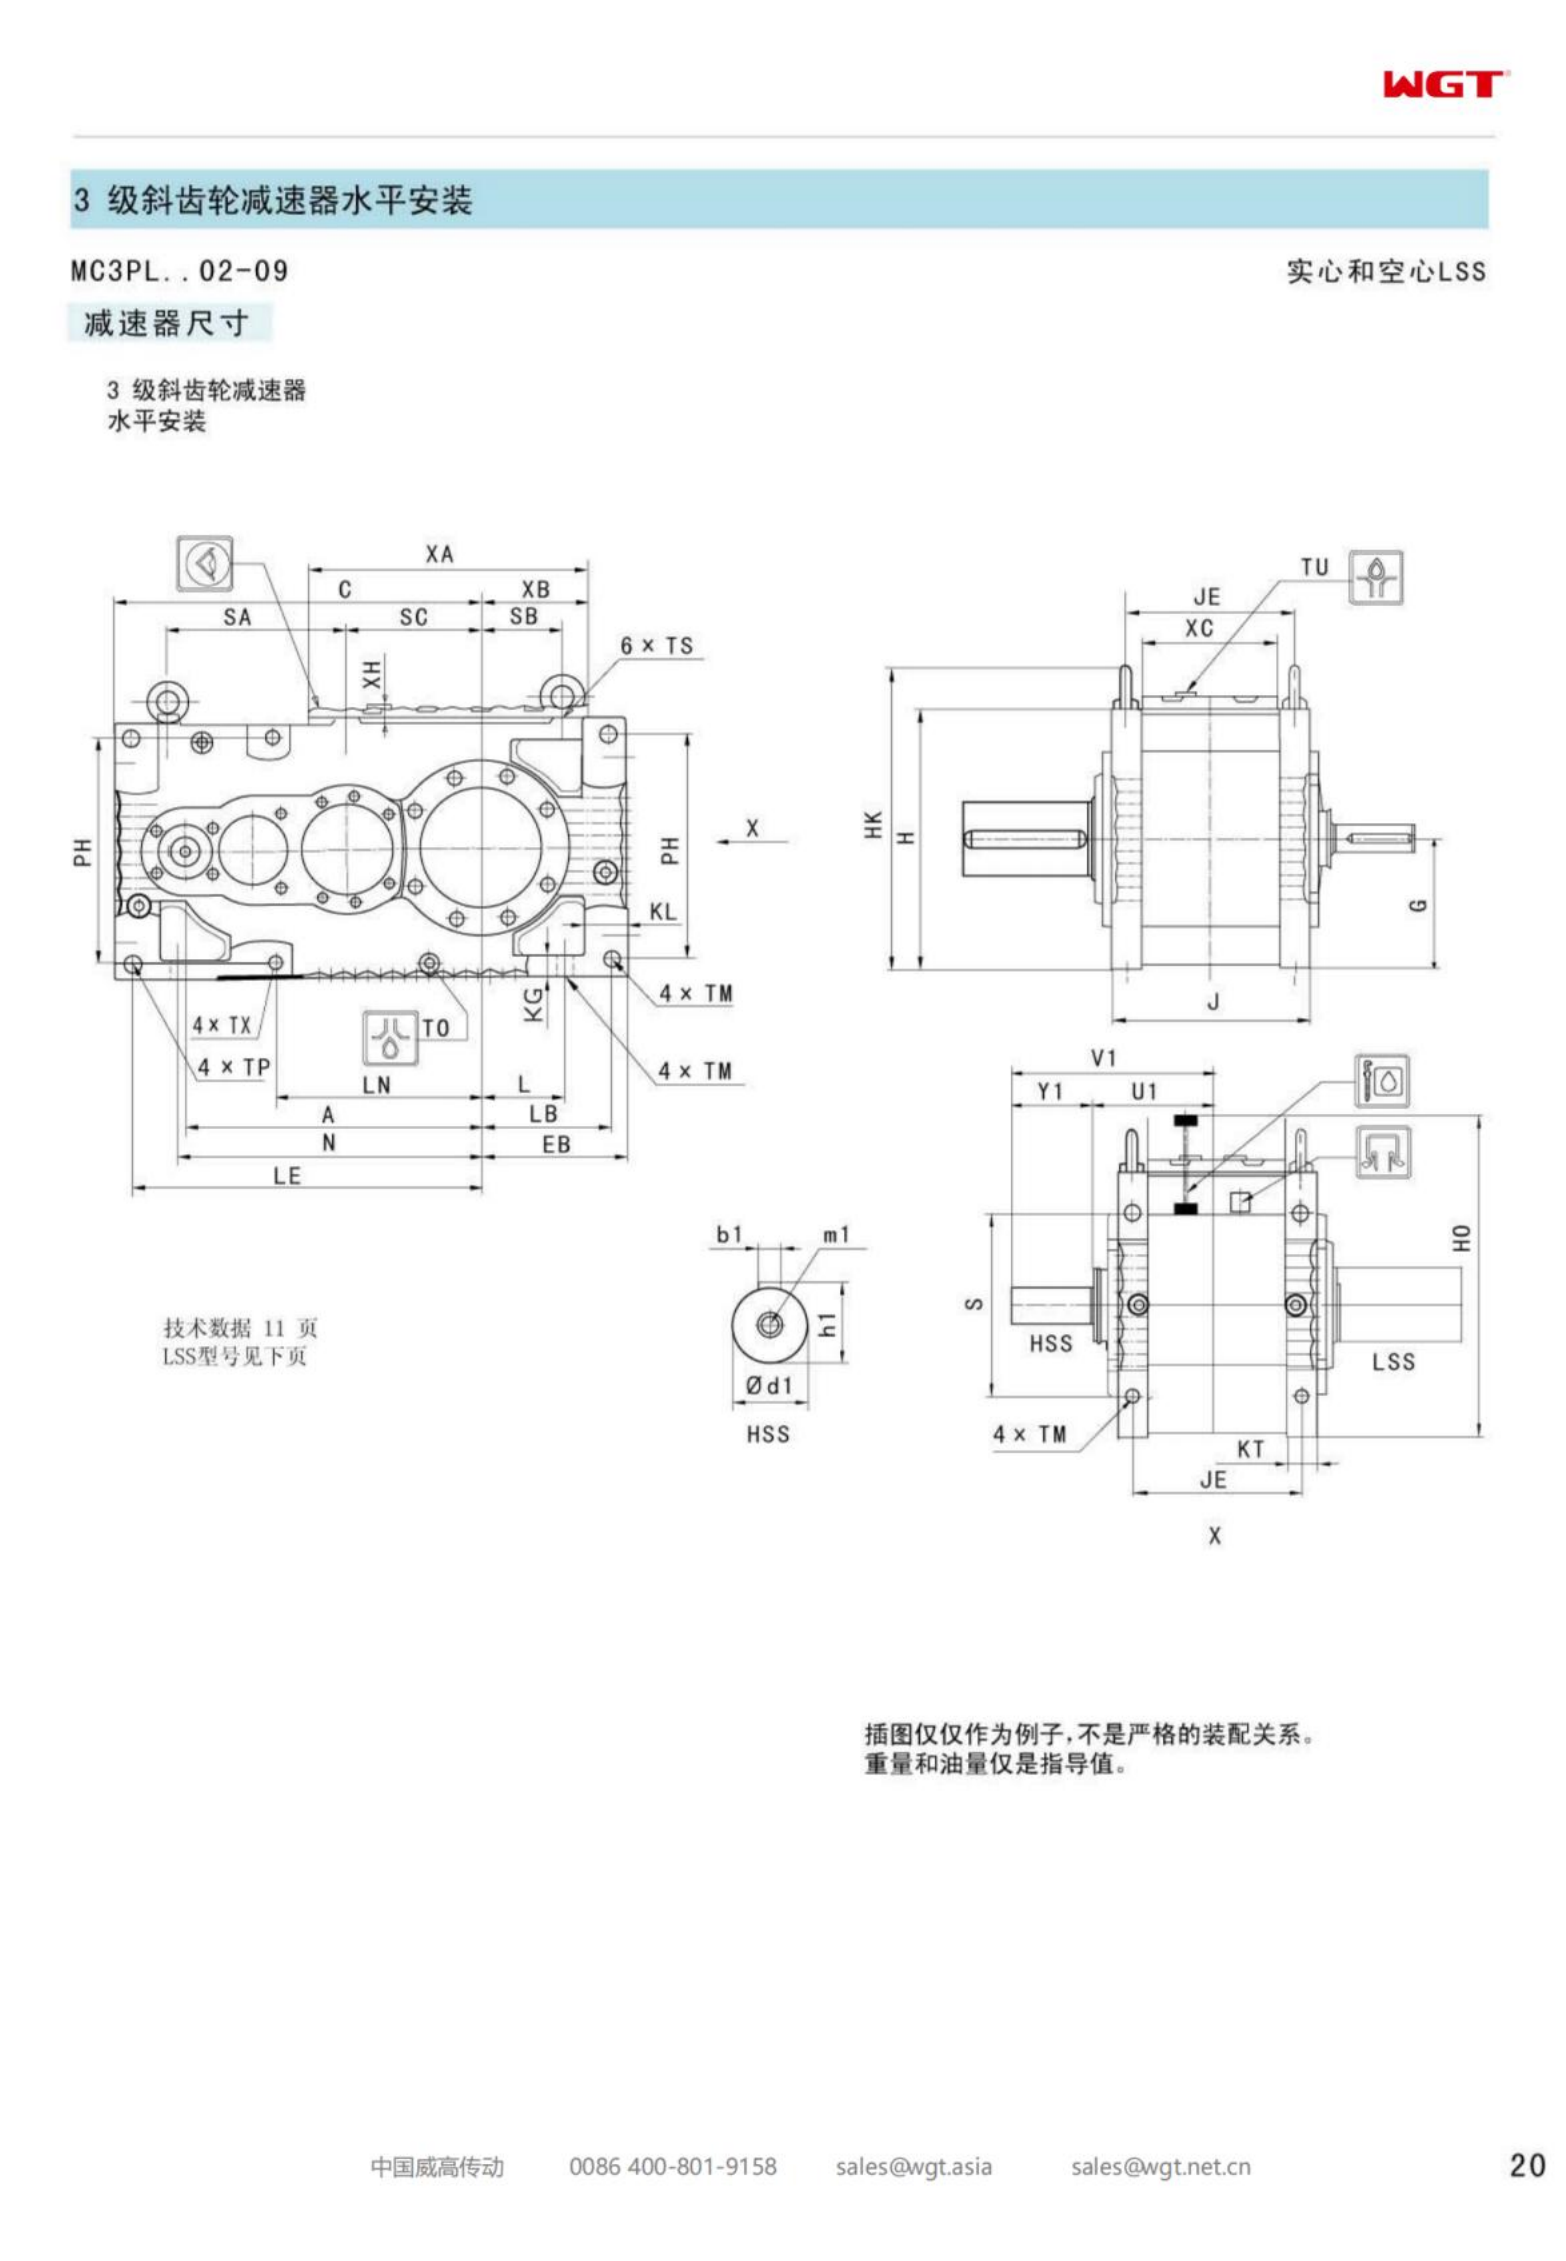 MC3PLST09 replaces _SEW_MC_Series gearbox (patent)